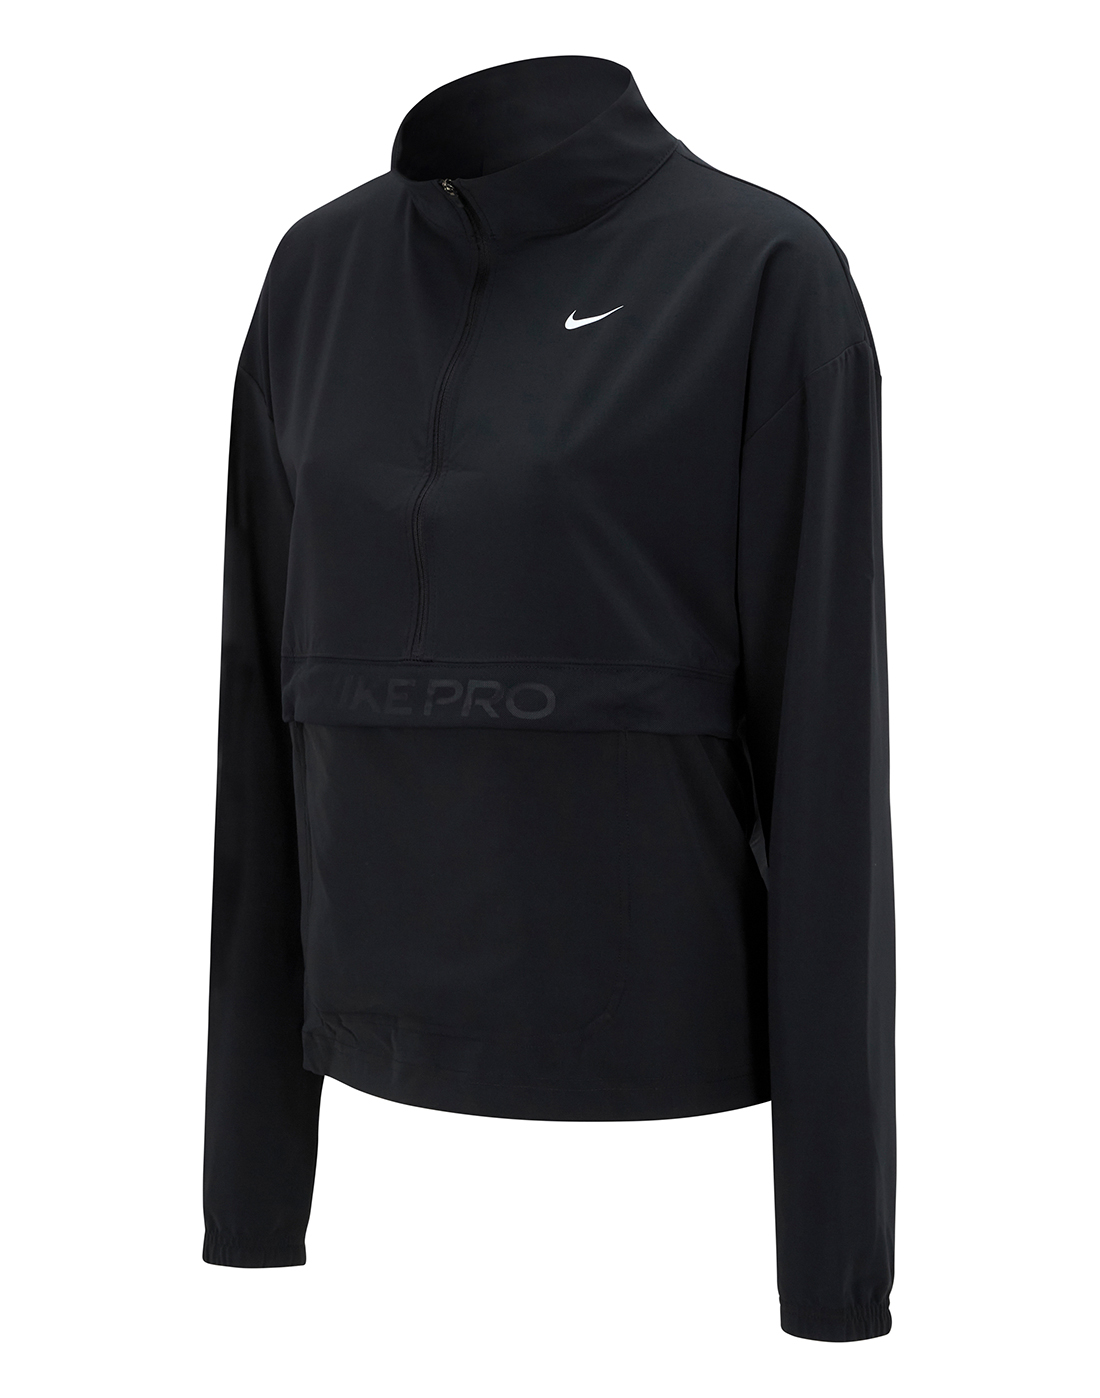 Nike Womens Woven Half Zip Jacket Black Adidas Nmd Runner Primeknit Sneaker Sale For Boys Eu - black and yellow pants roblox